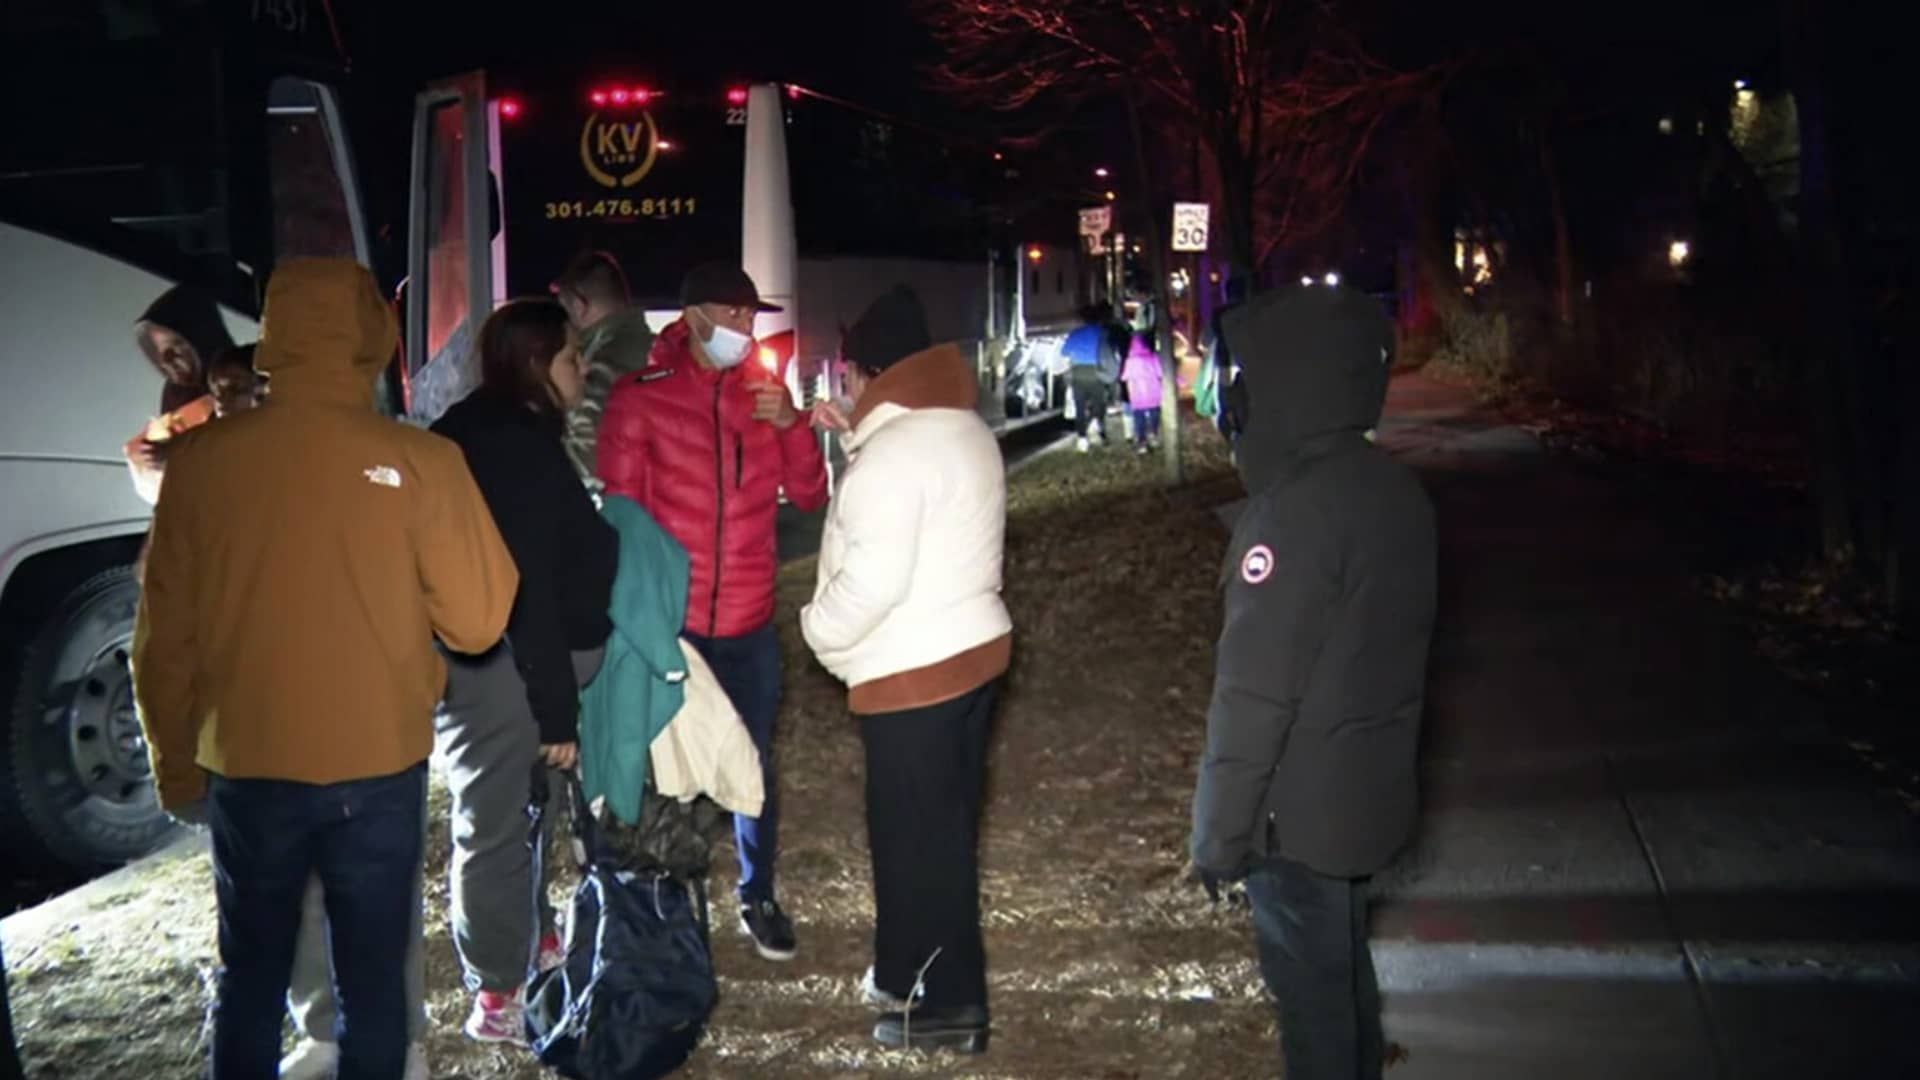 Migrants dropped near home of Vice President Kamala Harris on frigid Christmas Eve